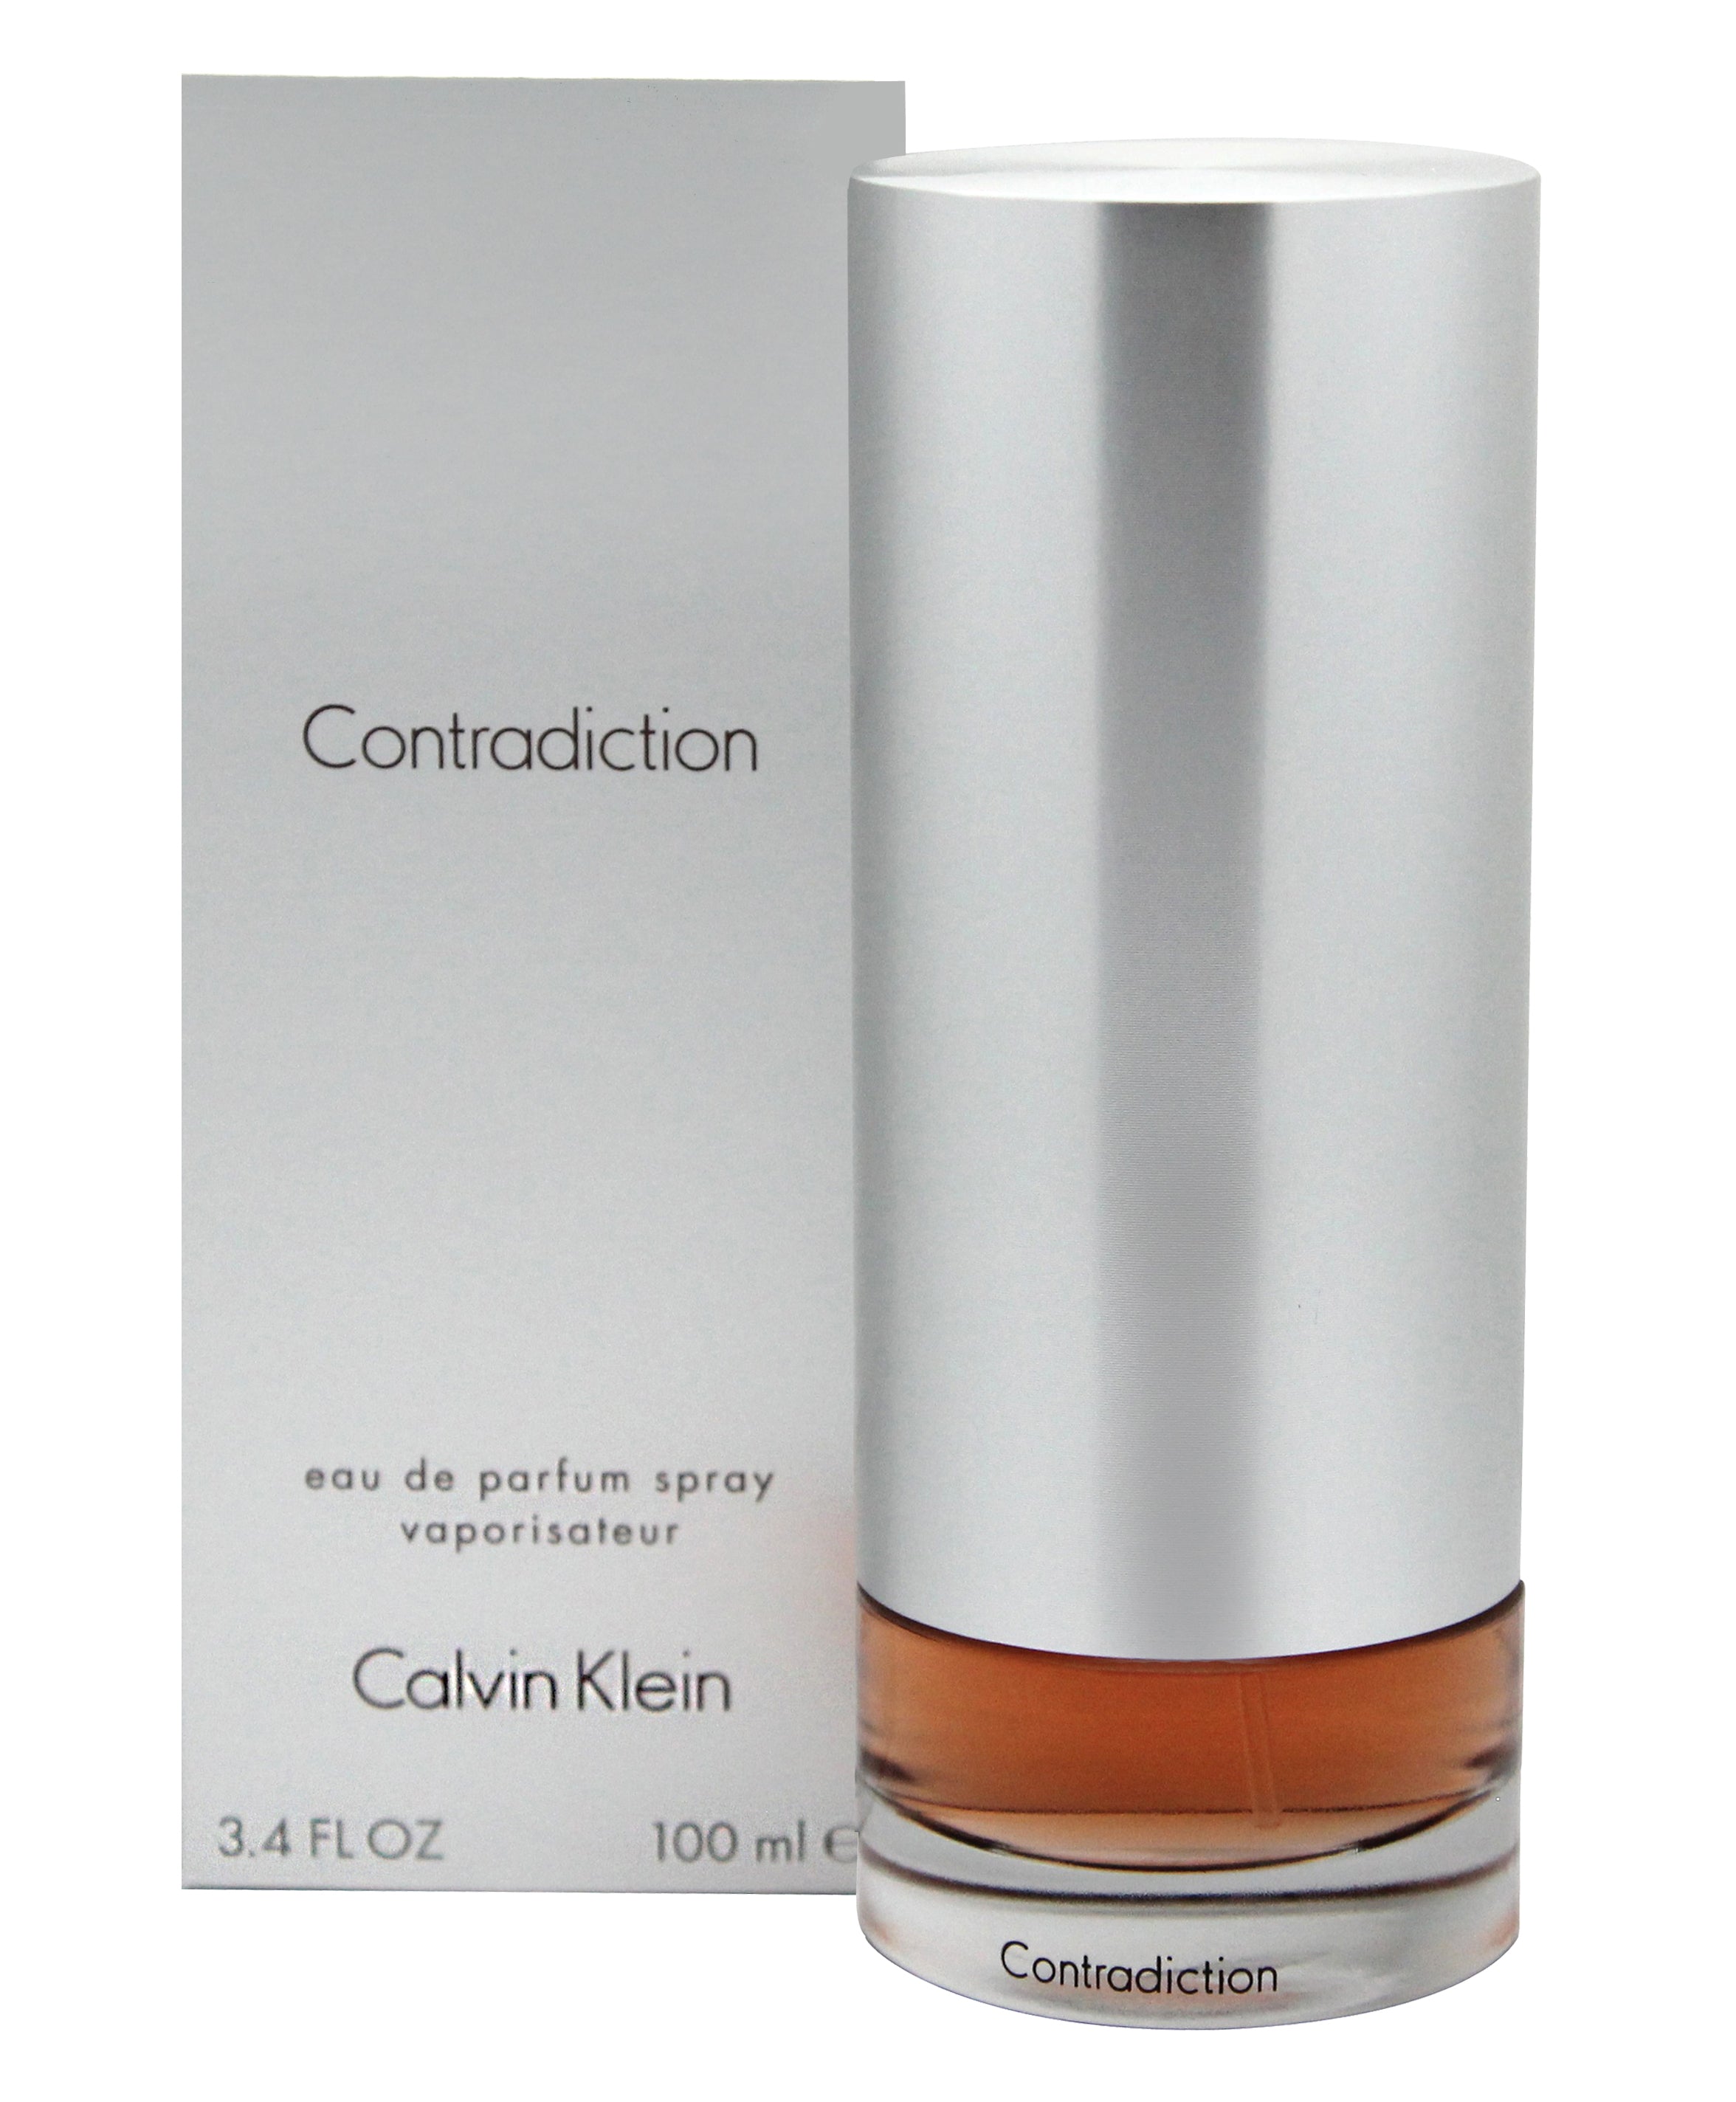 View Calvin Klein Contradiction Eau de Parfum 100ml Spray information